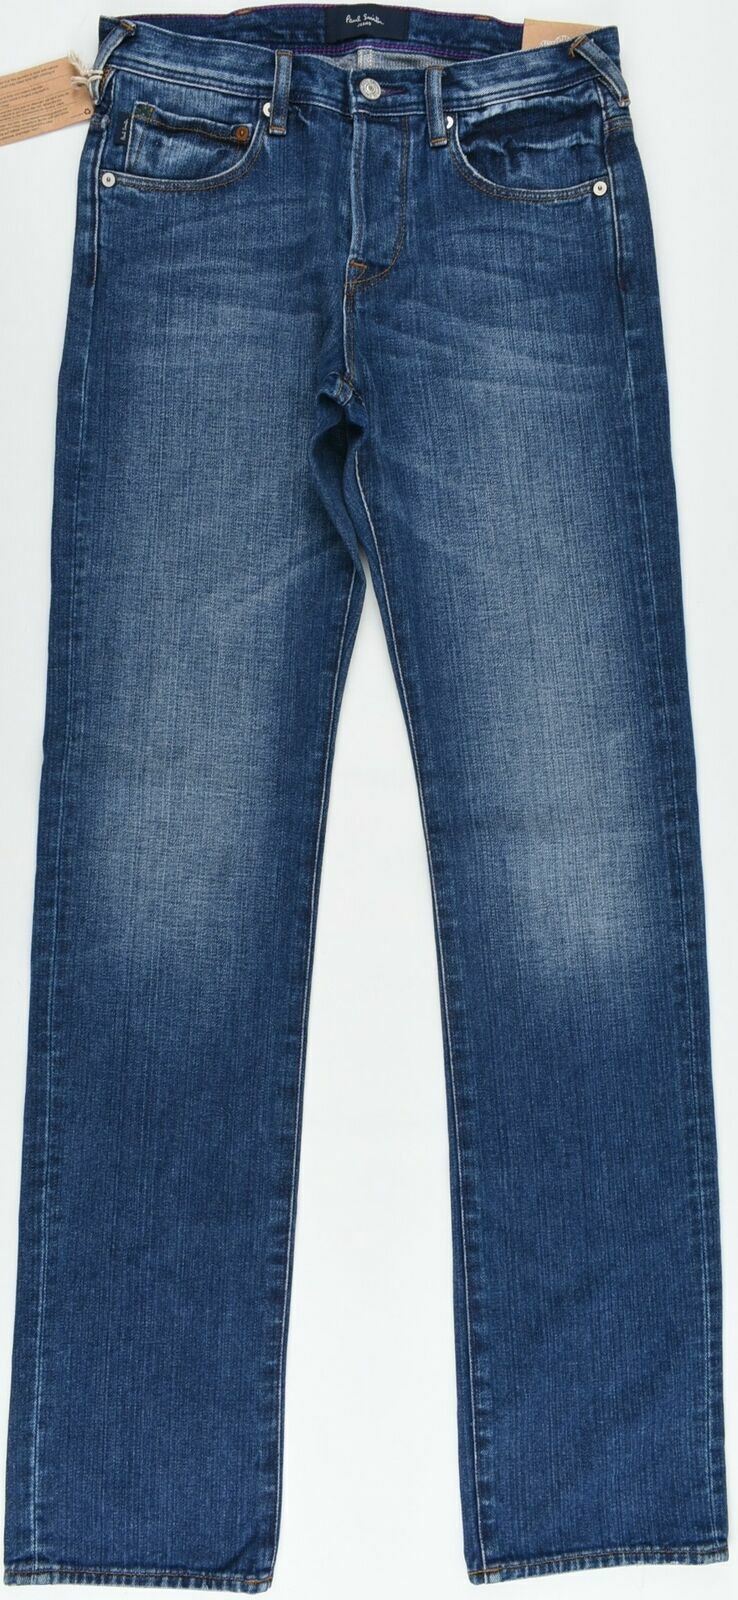 PAUL SMITH Men's Stonewashed Blue Denim Jeans- W28 L34